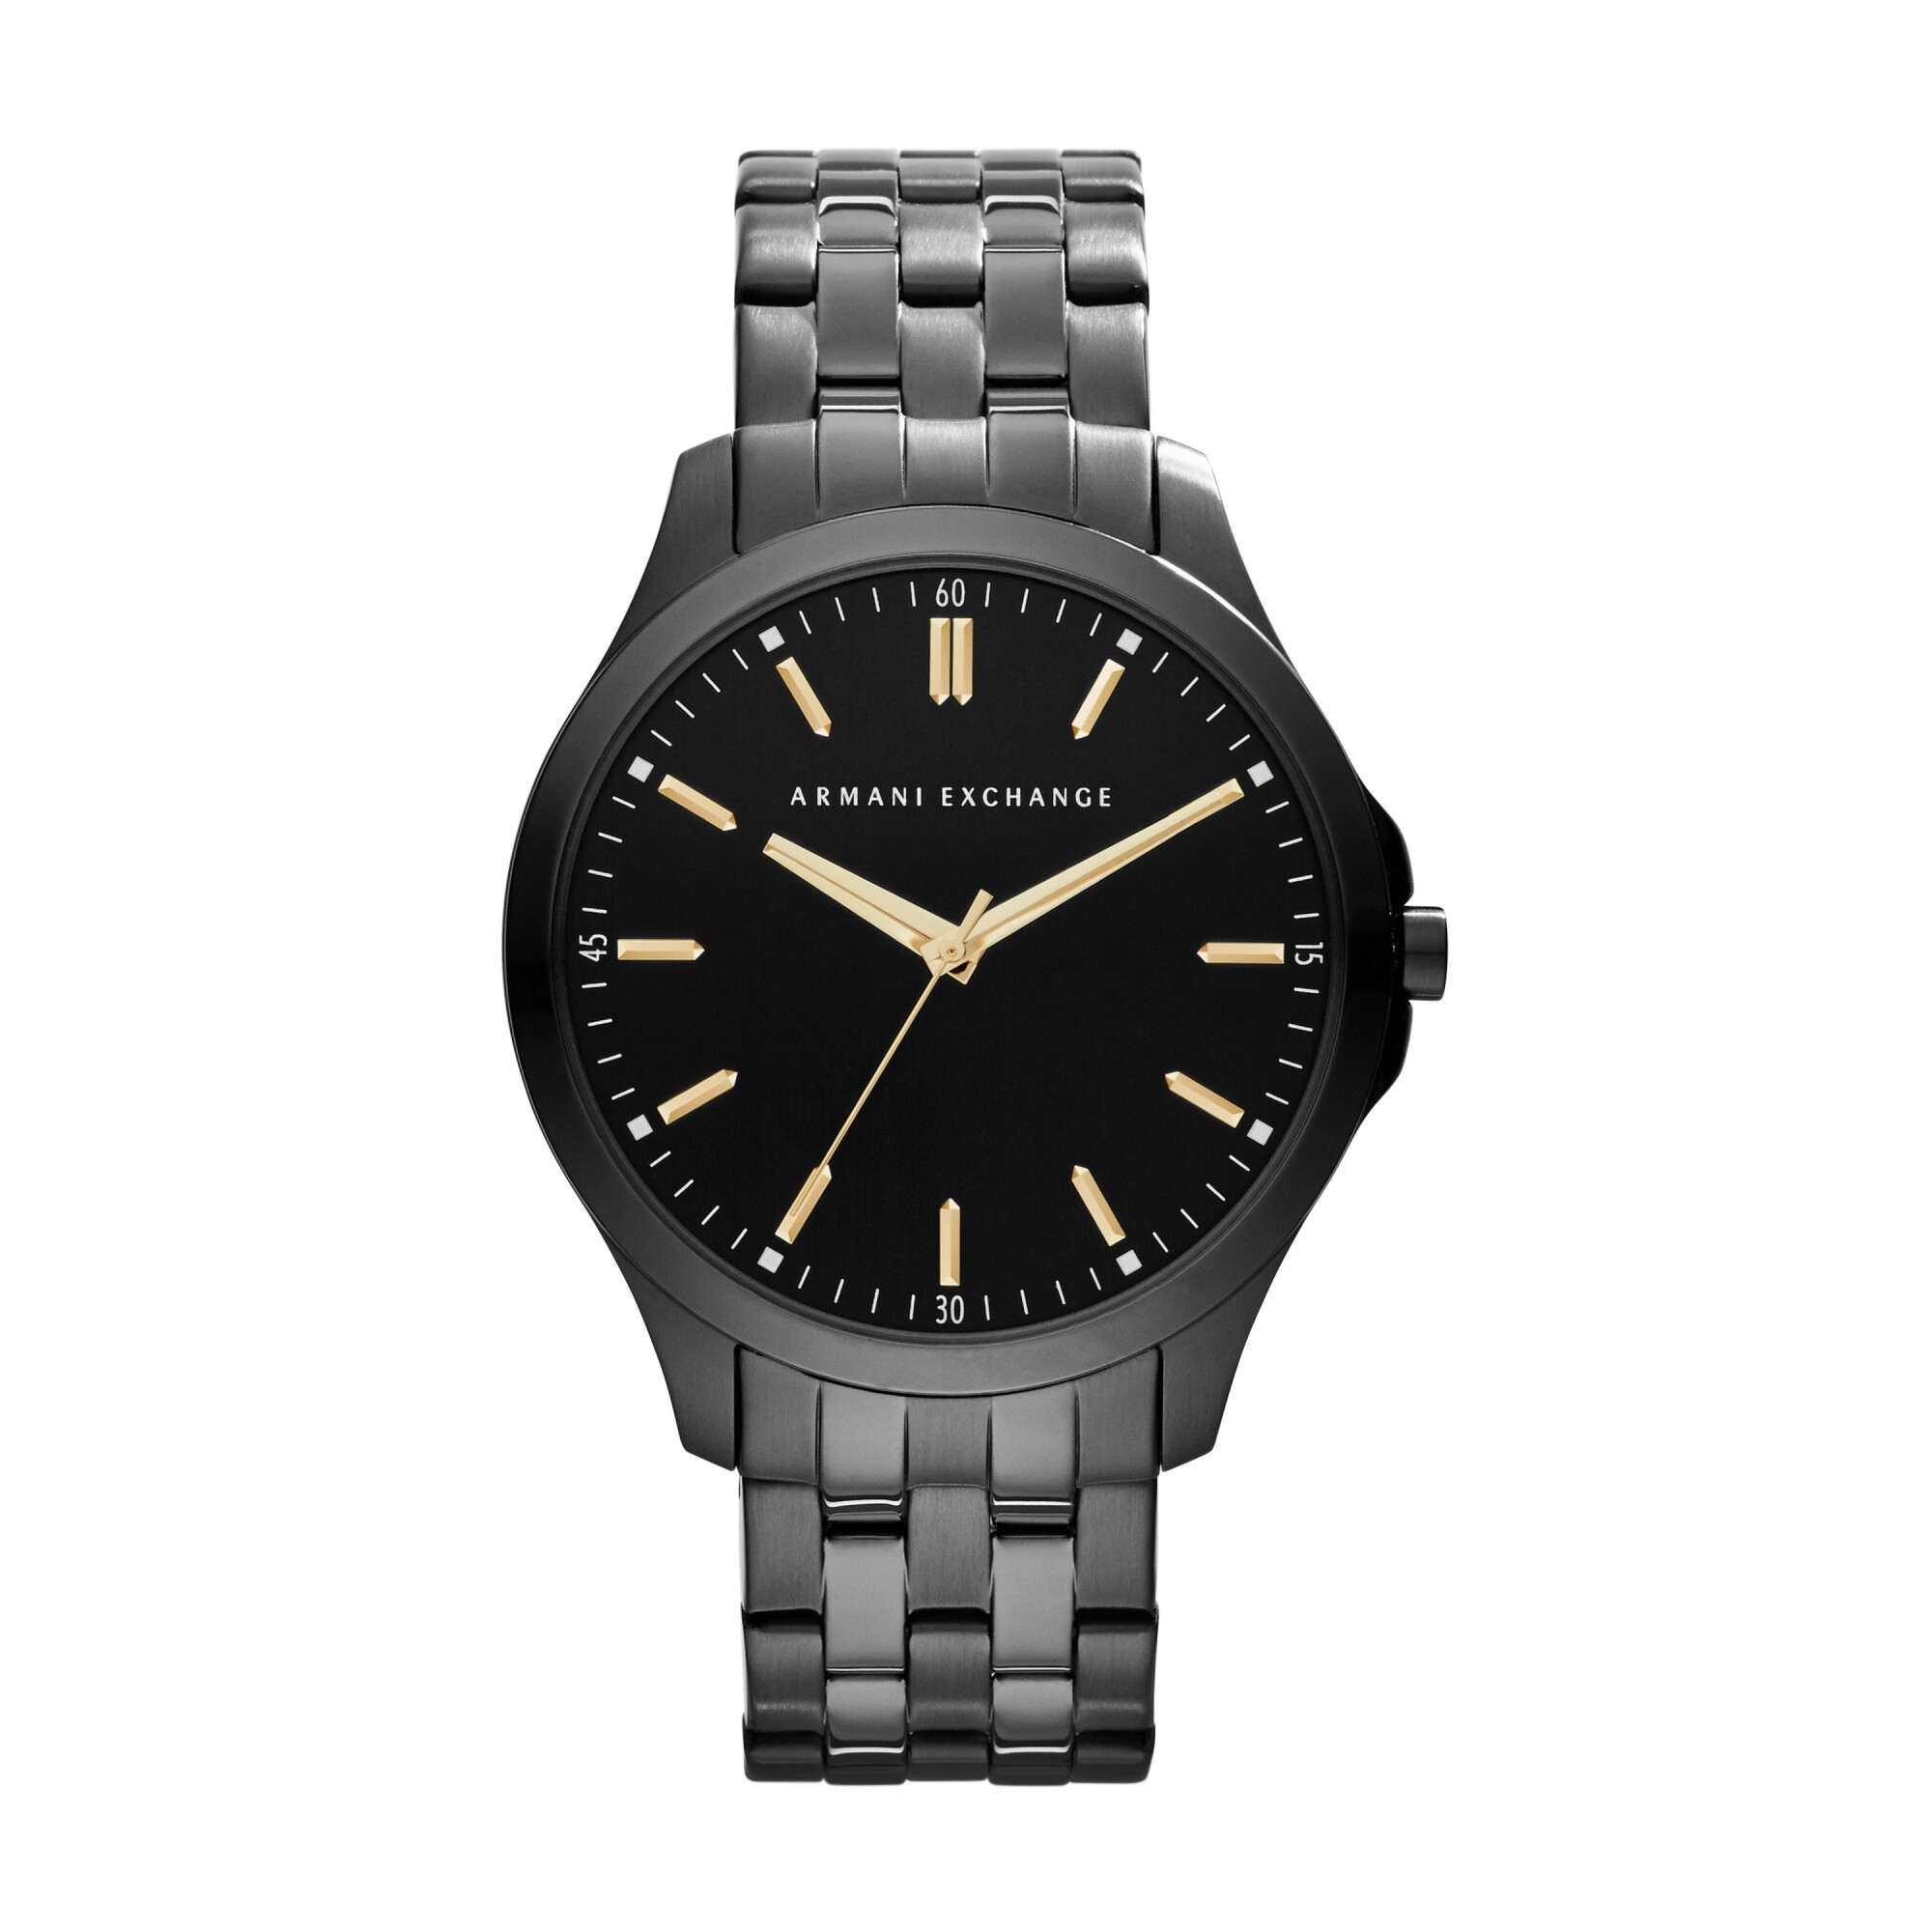 Reloj Diesel Fashion Cuero Negro — WatchMe